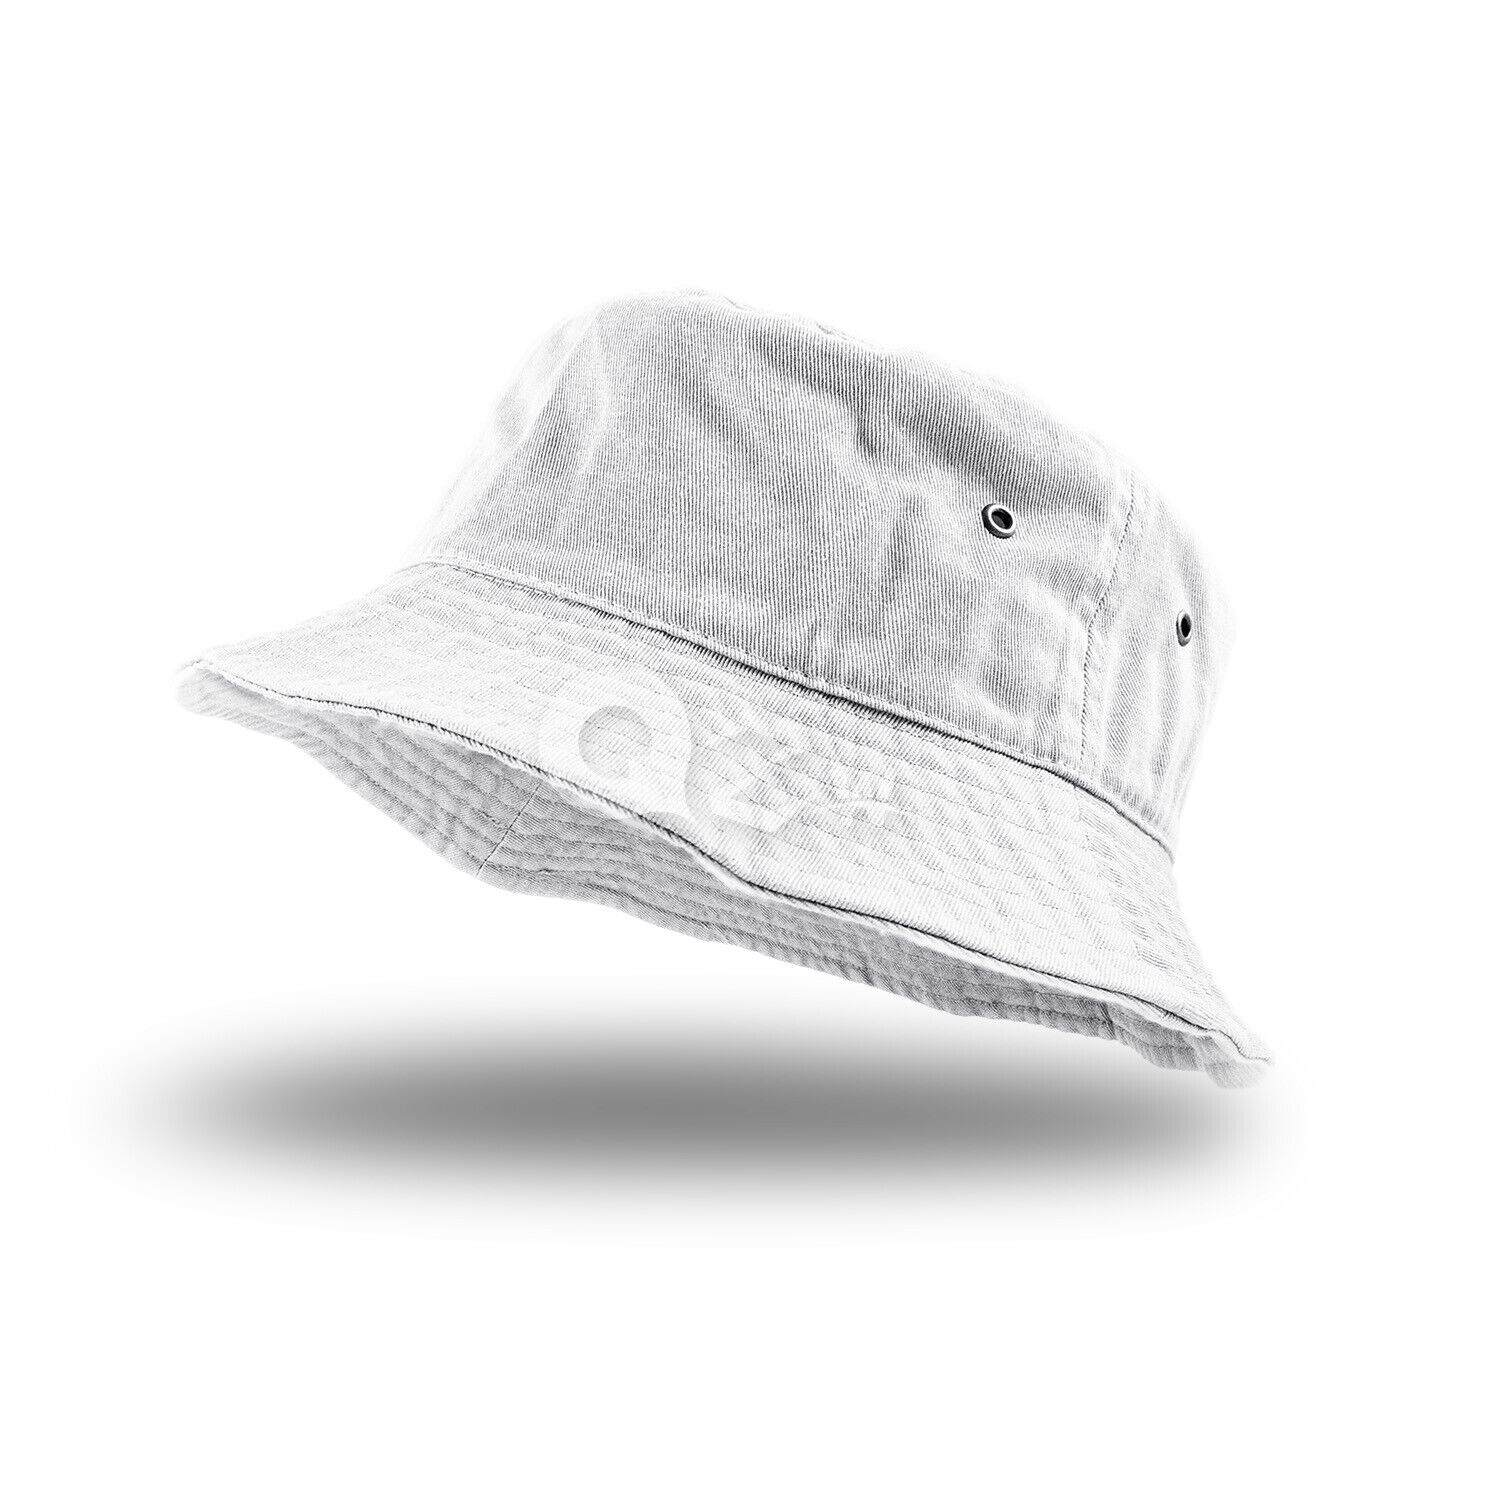 Color:White:Bucket Hat Cap Cotton Fishing Boonie Brim visor Sun Safari Summer Men Camping